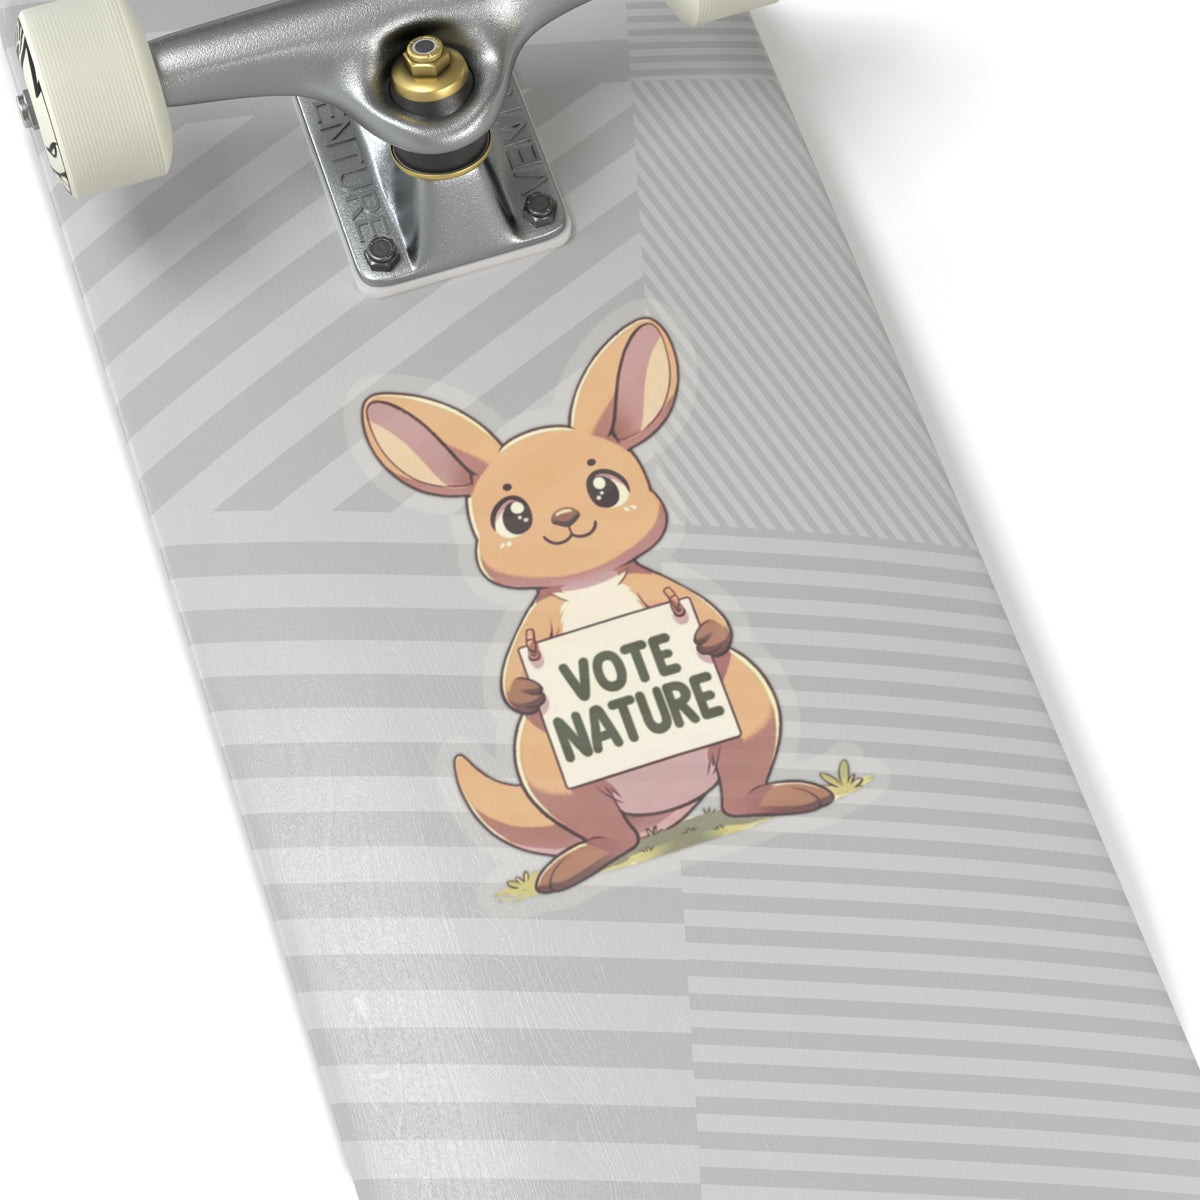 Inspirational Cute Kangaroo Statement vinyl Sticker: Vote Nature! for laptop, kindle, phone, ipad, instrument case, notebook, mood board